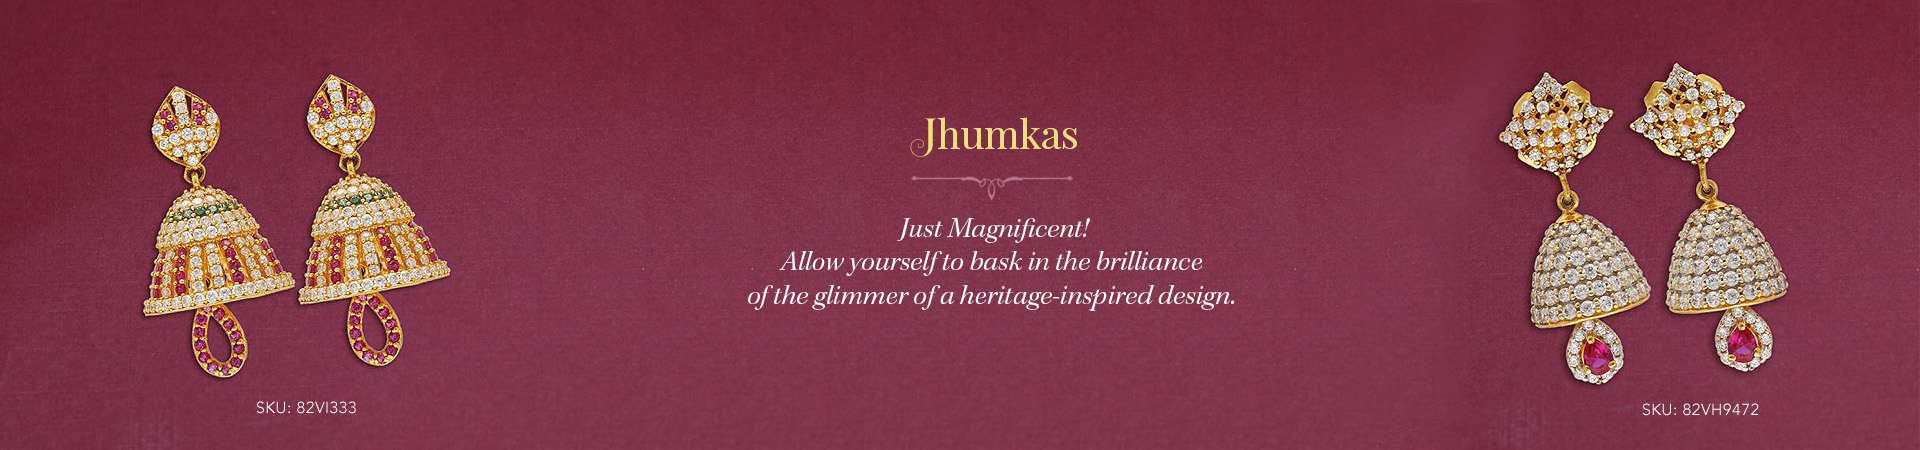 Gold Jhumkas Earrings Online 